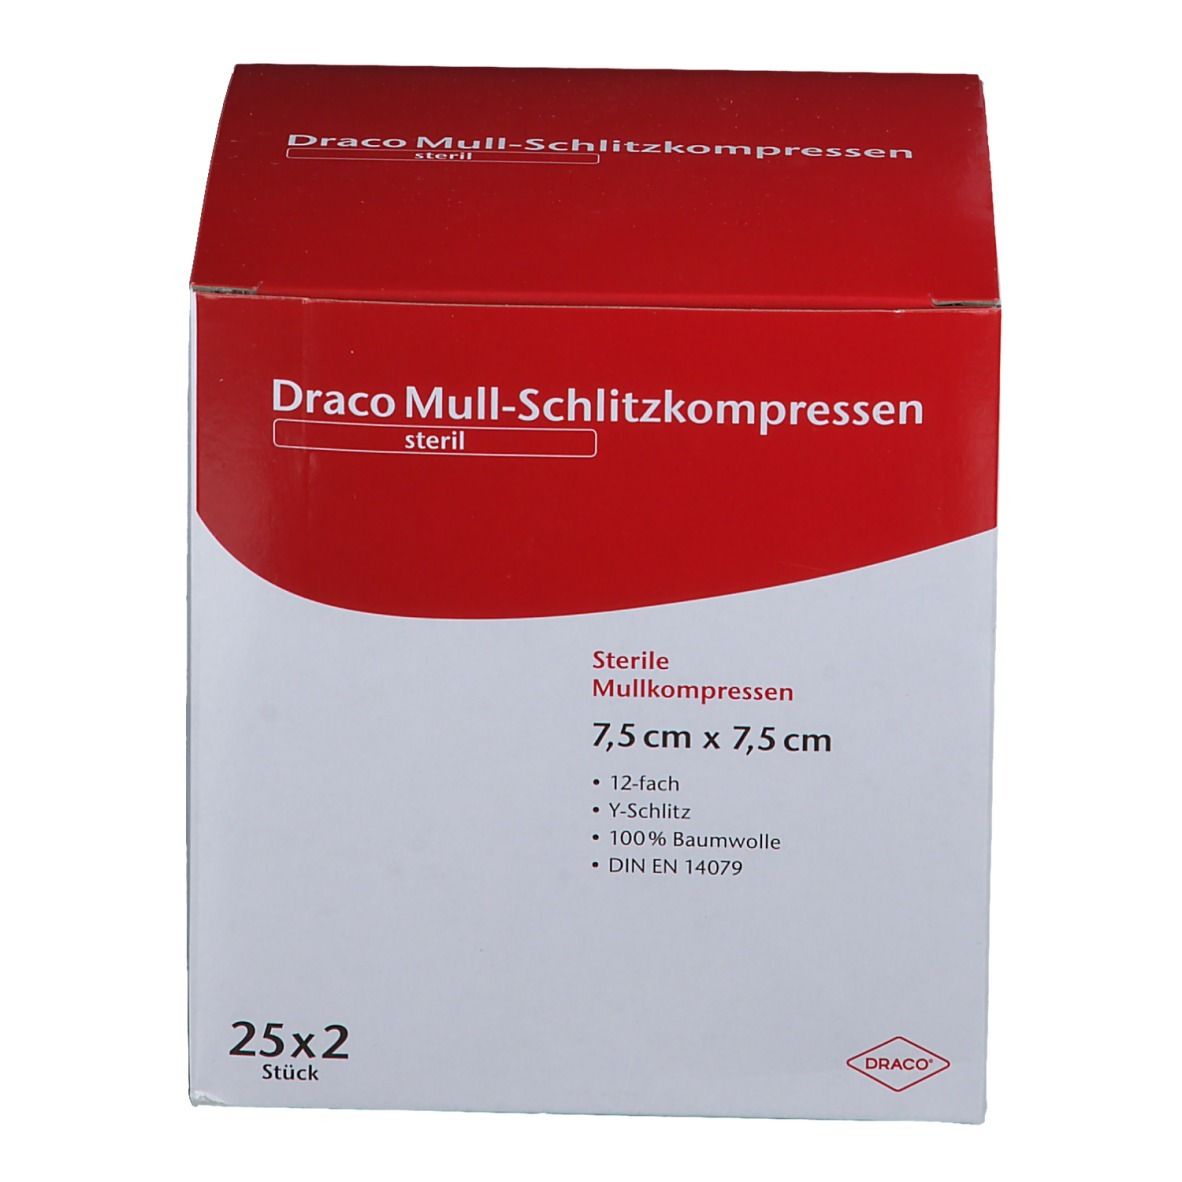 Draco Mull-Schlitzkompressen 12fach 7,5 x 7,5 cm steril